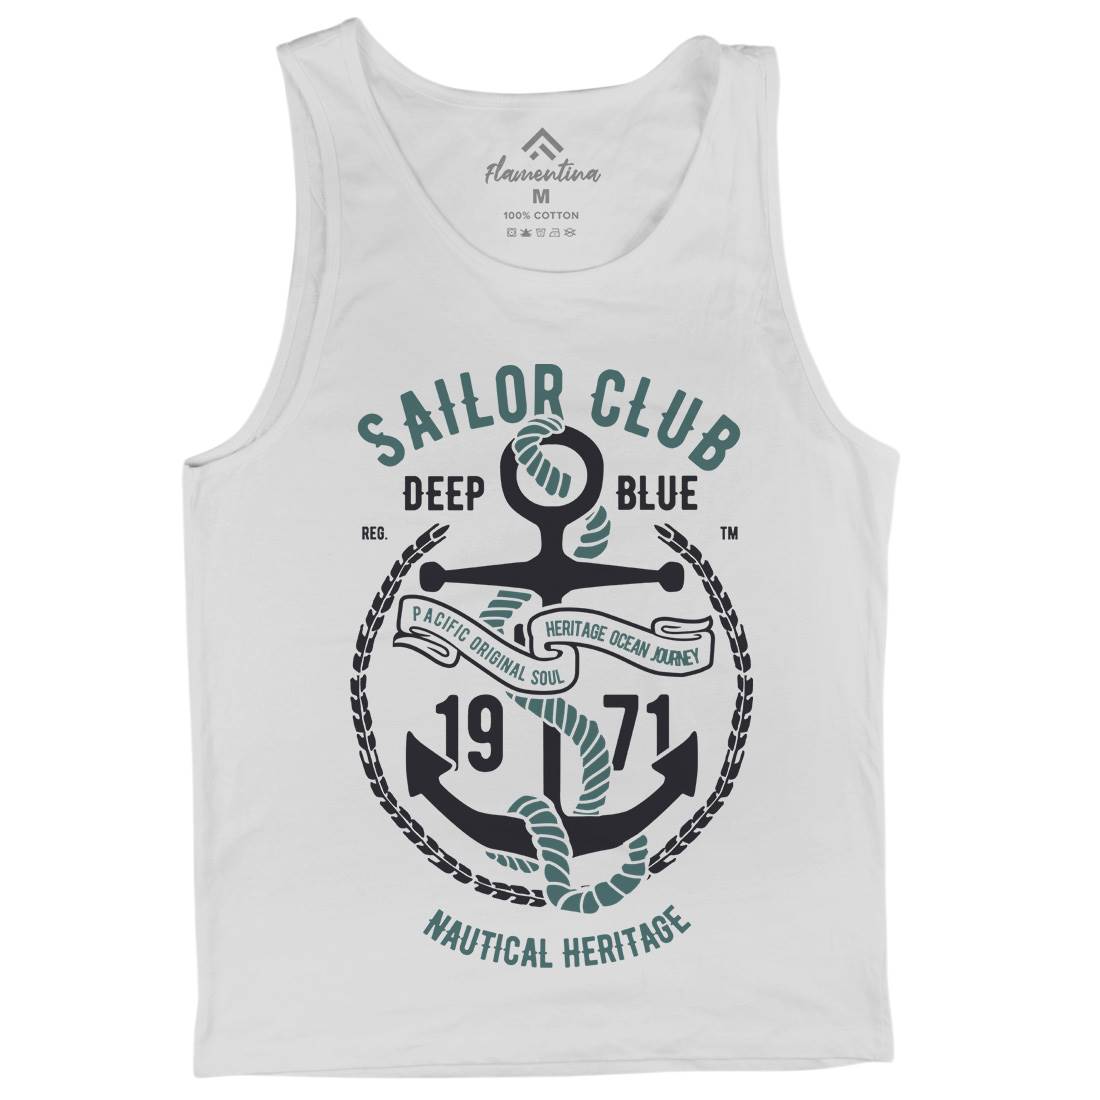 Sailor Club Mens Tank Top Vest Navy B445